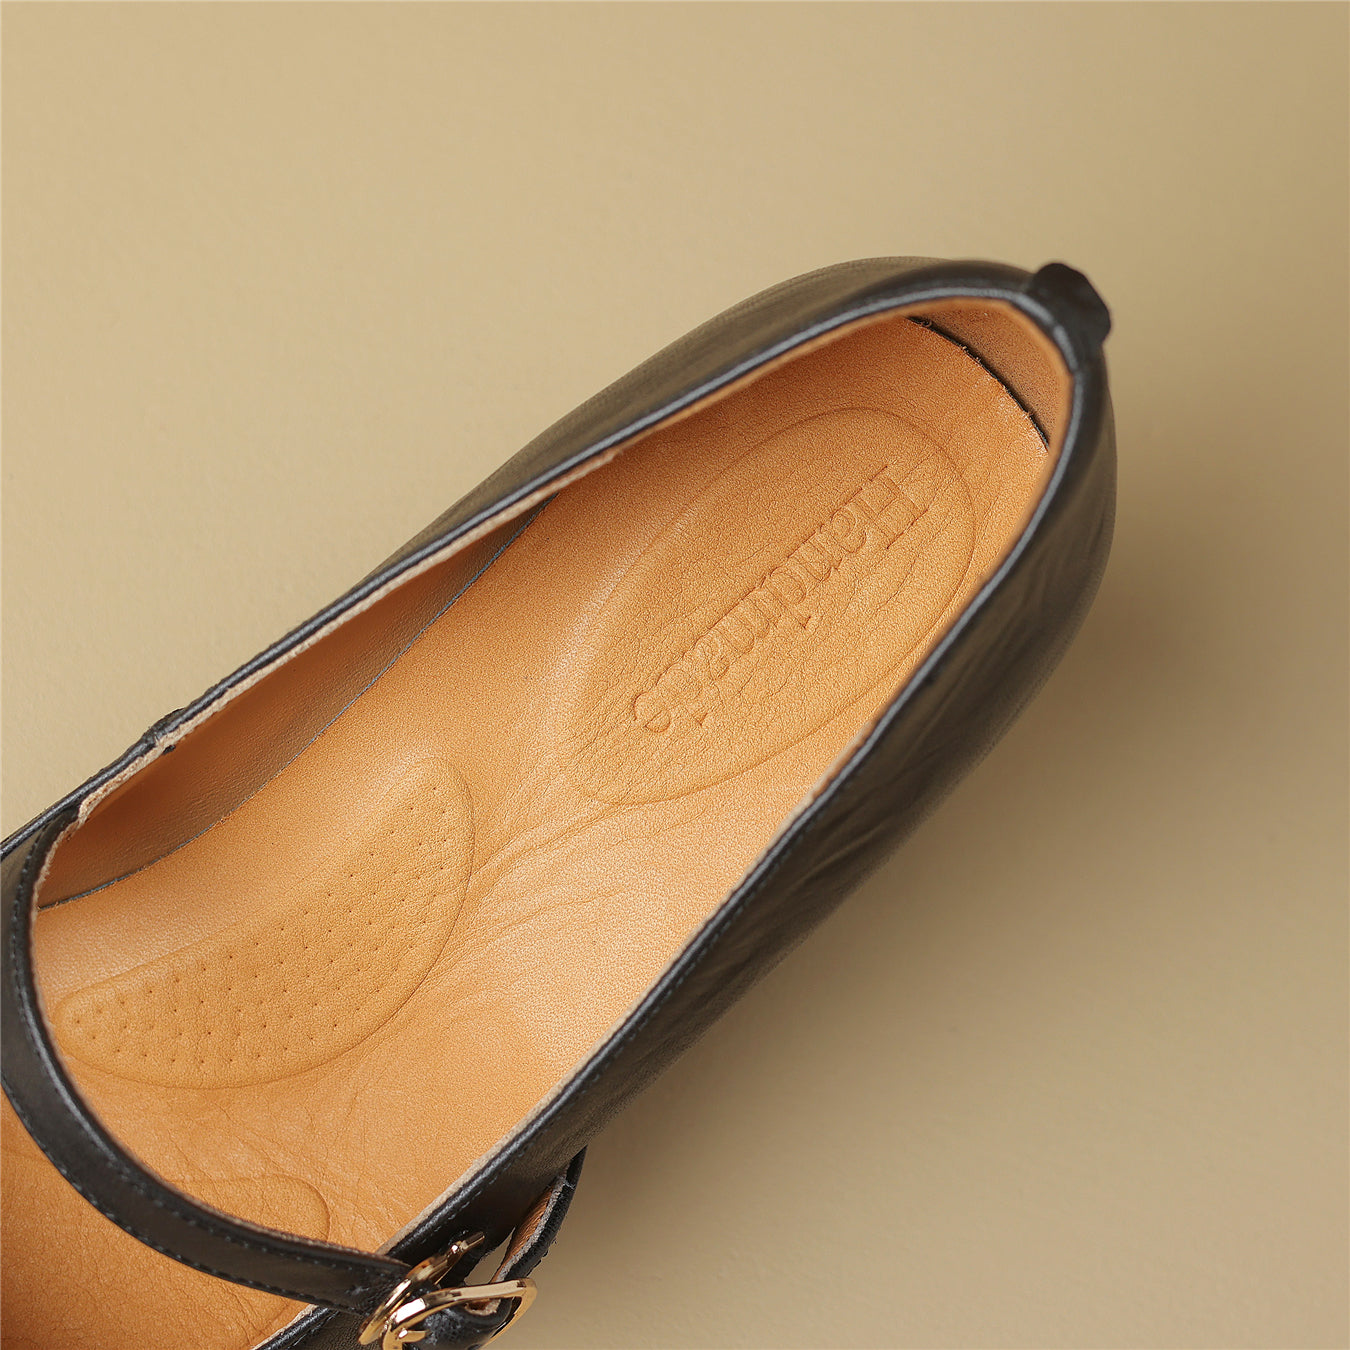 TinaCus Women's Handmade Genuine Leather Chunky Heel Buckle Mary Jane Pumps